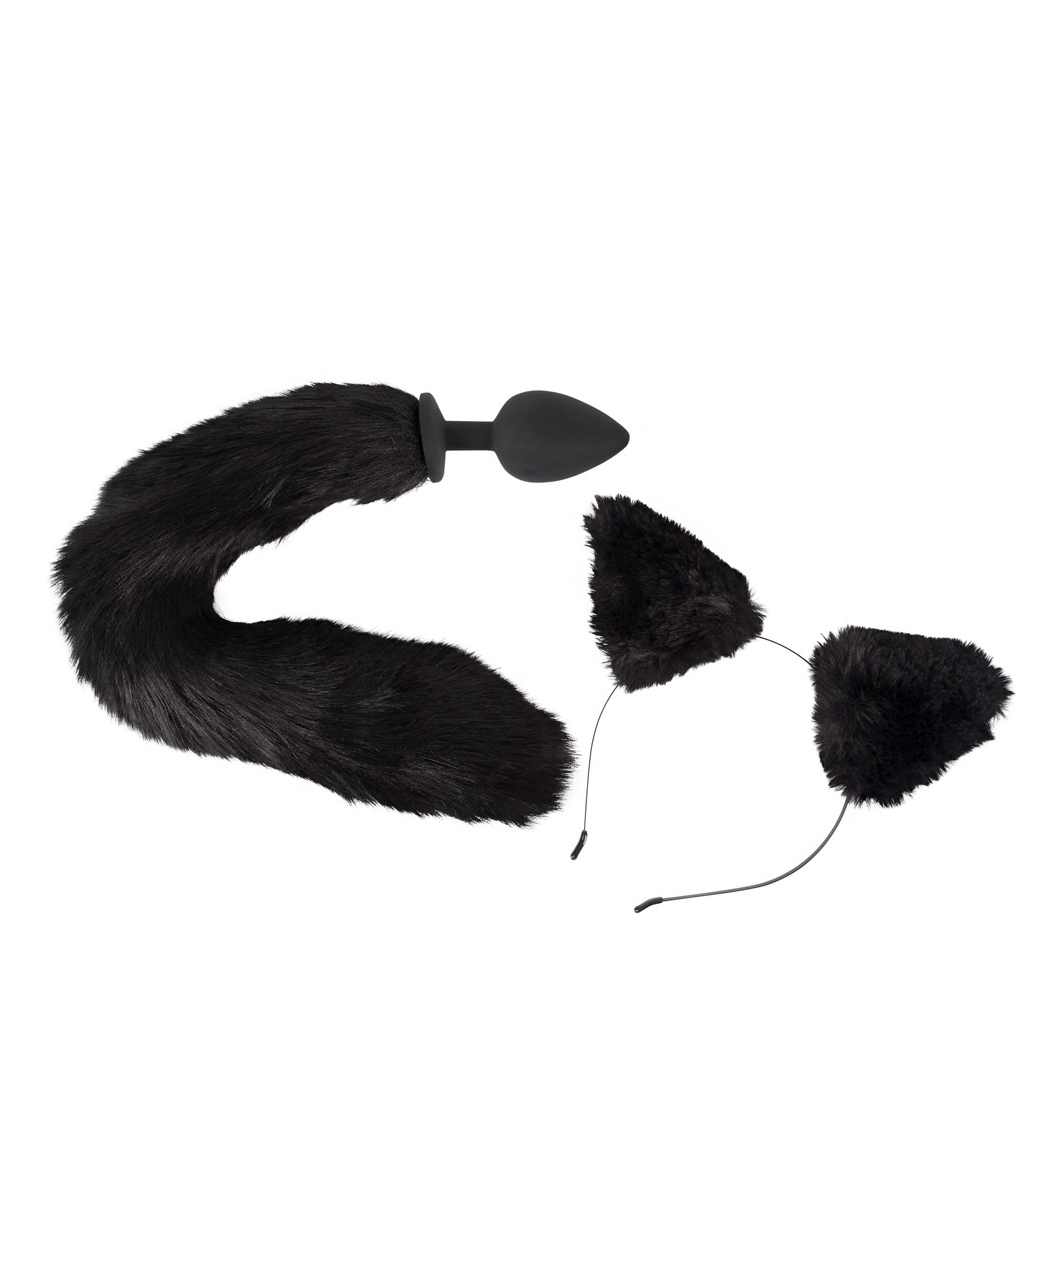 Bad Kitty Pet Play Tail Plug & Ears komplekt